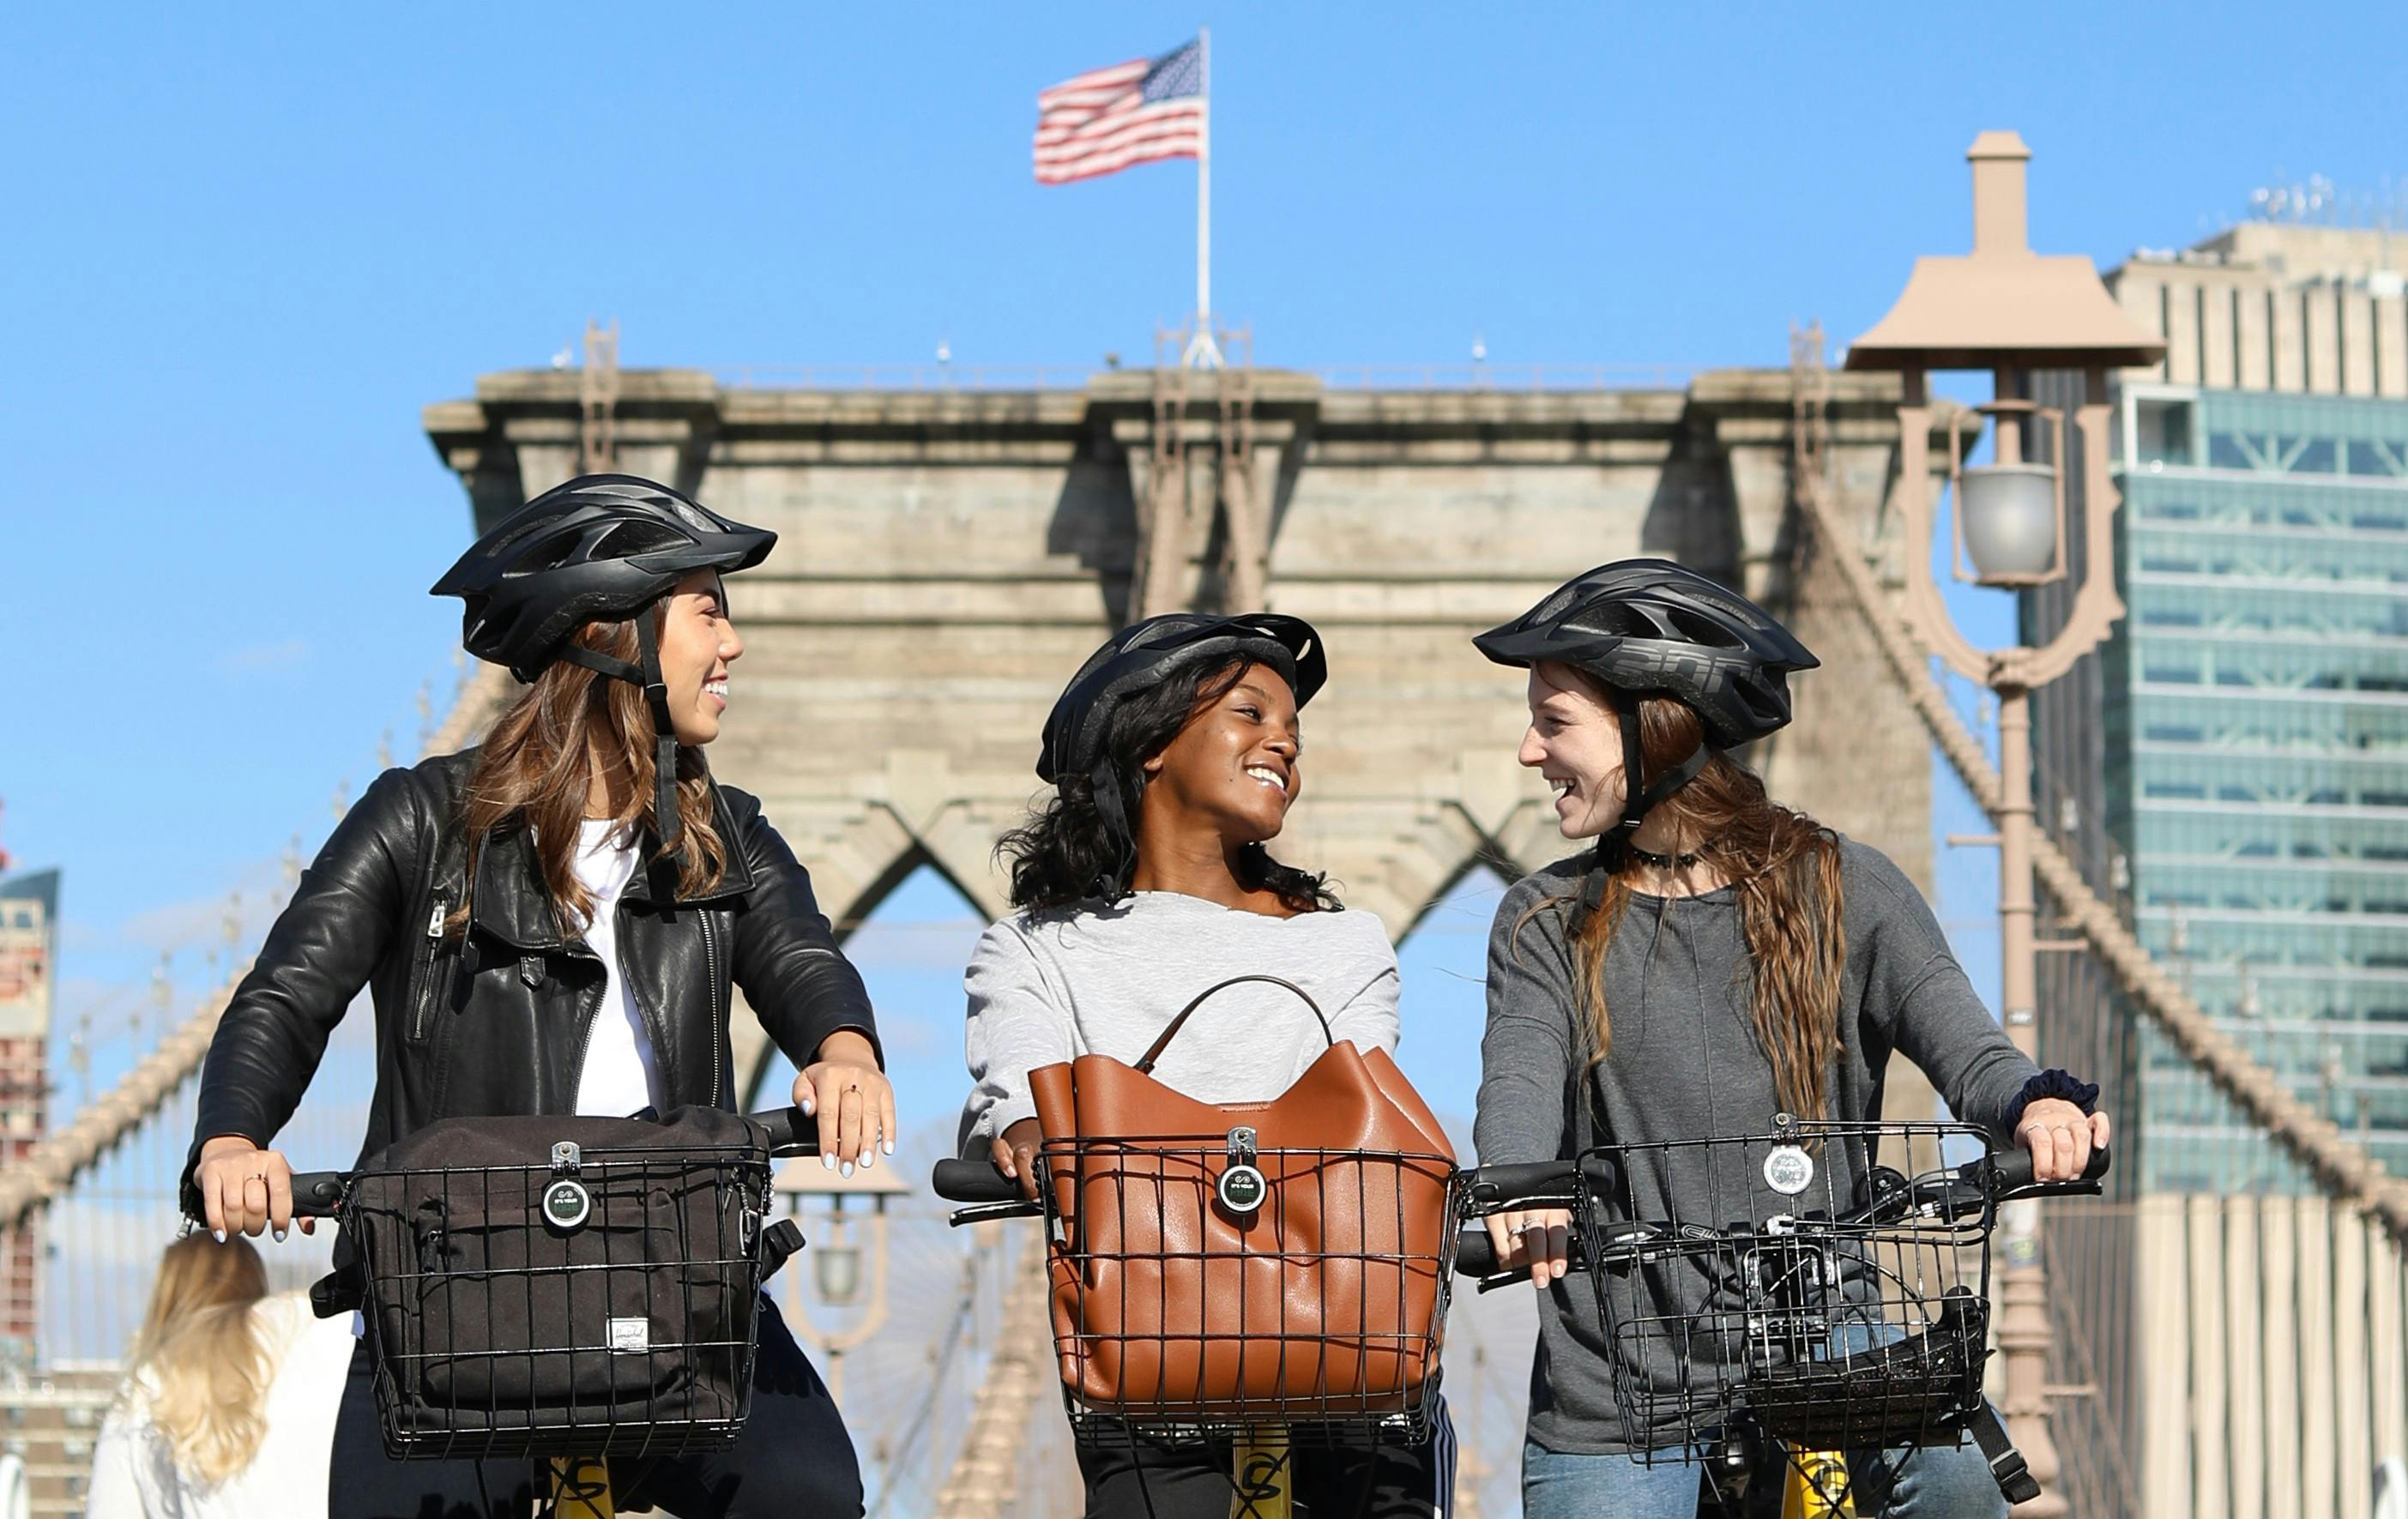 Brooklyn Bridge bike rental